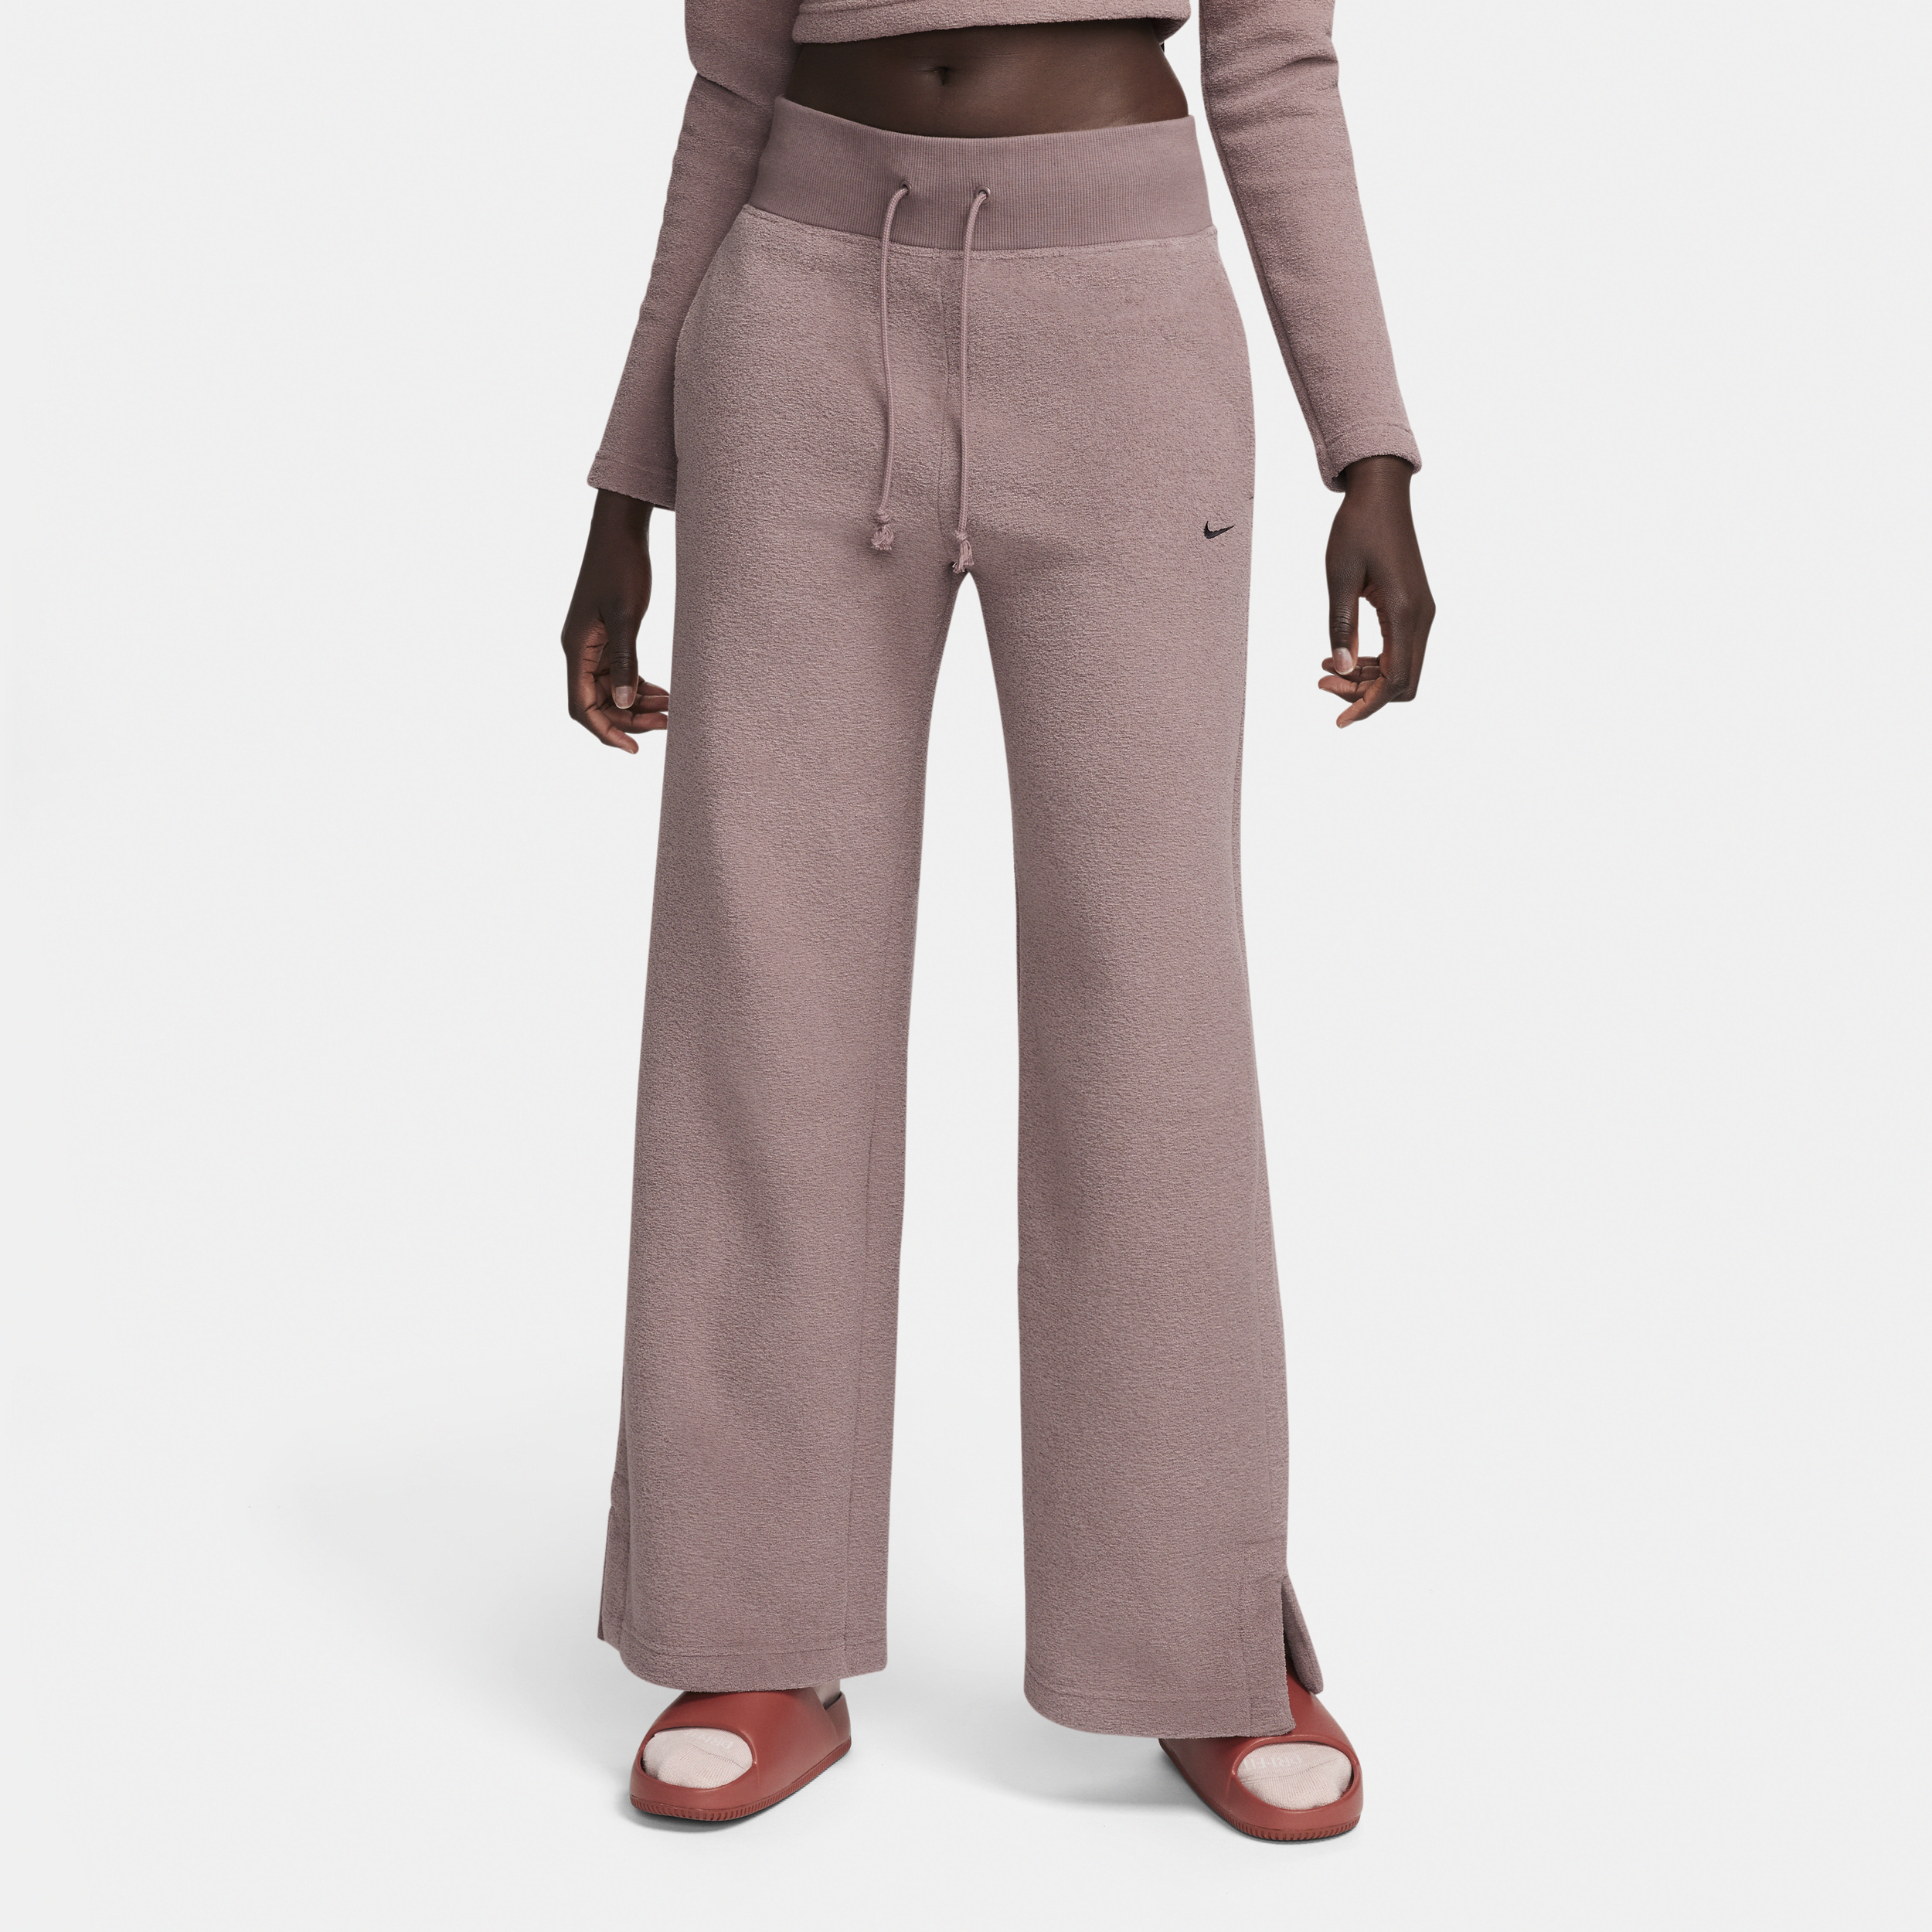 Pantaloni confortevoli in fleece a gamba larga e vita alta Nike Sportswear Phoenix Plush – Donna - Viola